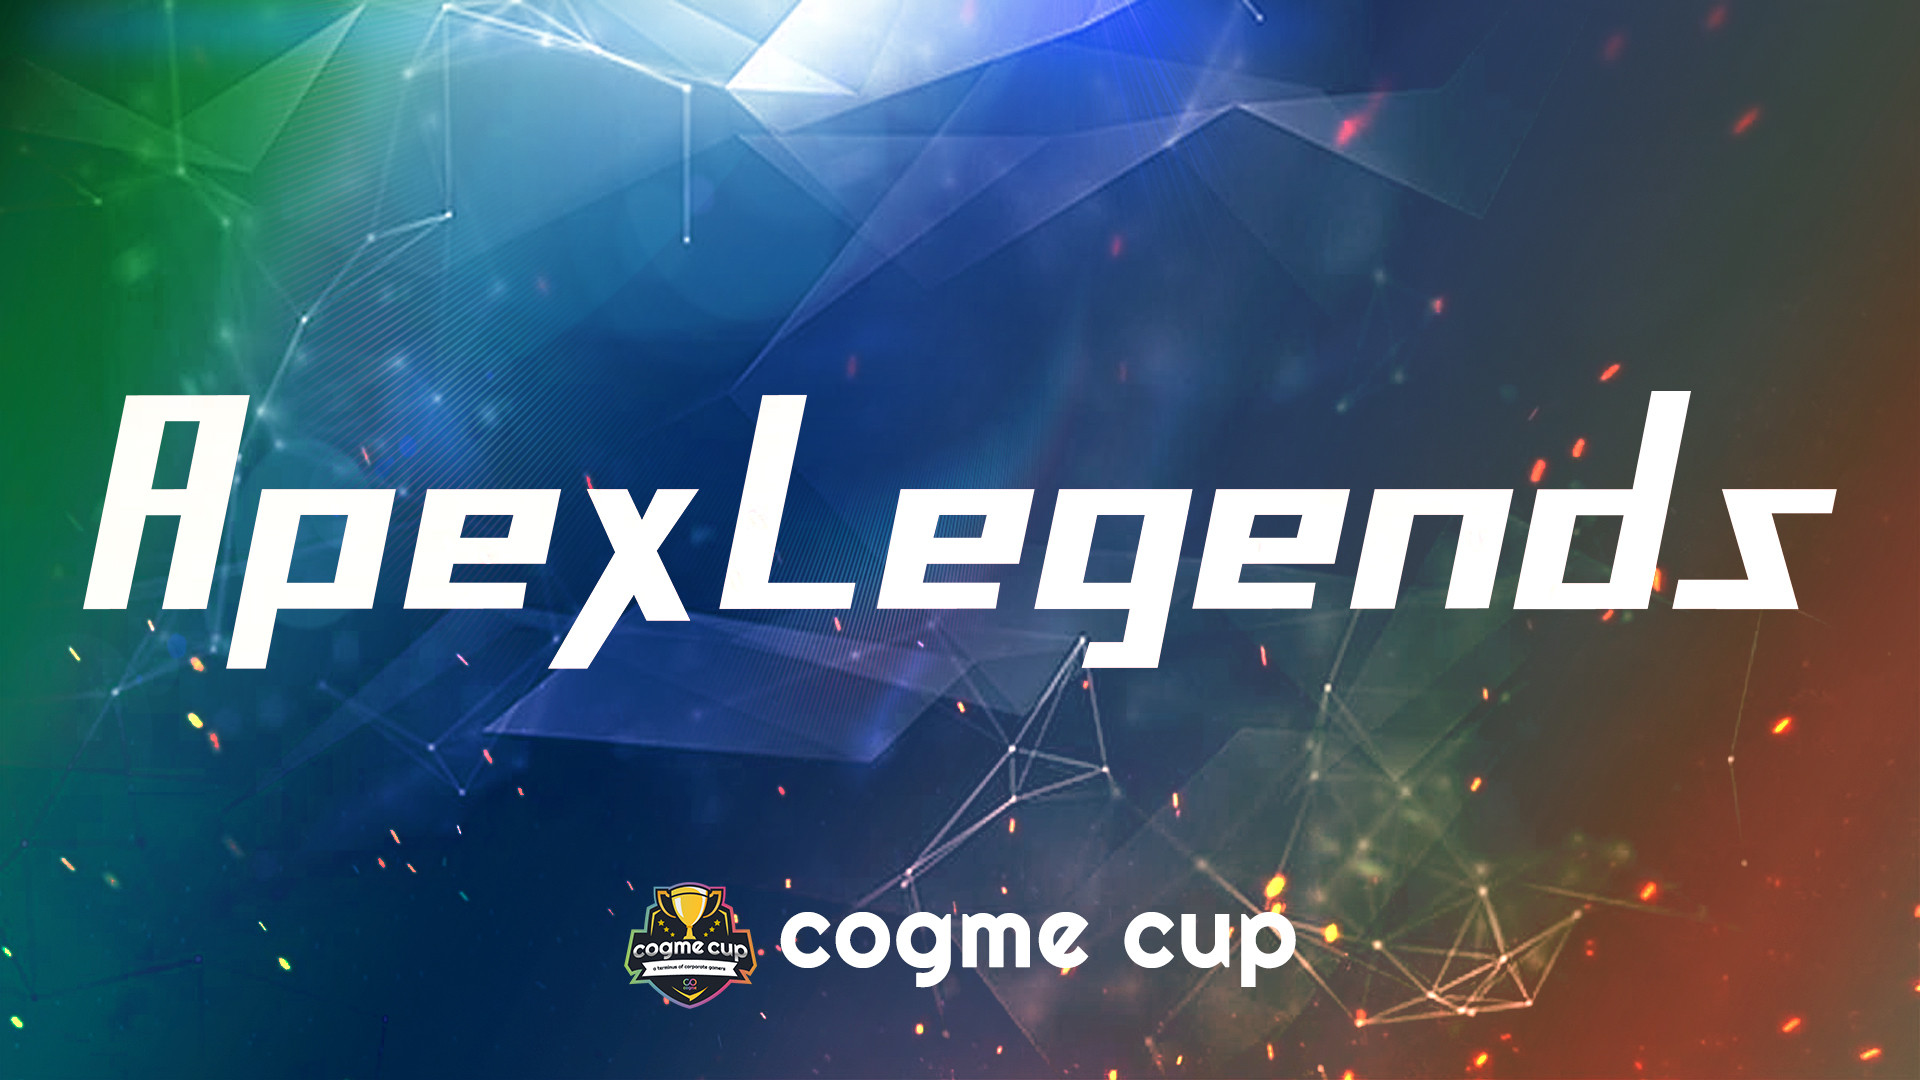 【大会情報】cogme cup #2 ApexLegends【2021年7月21日】